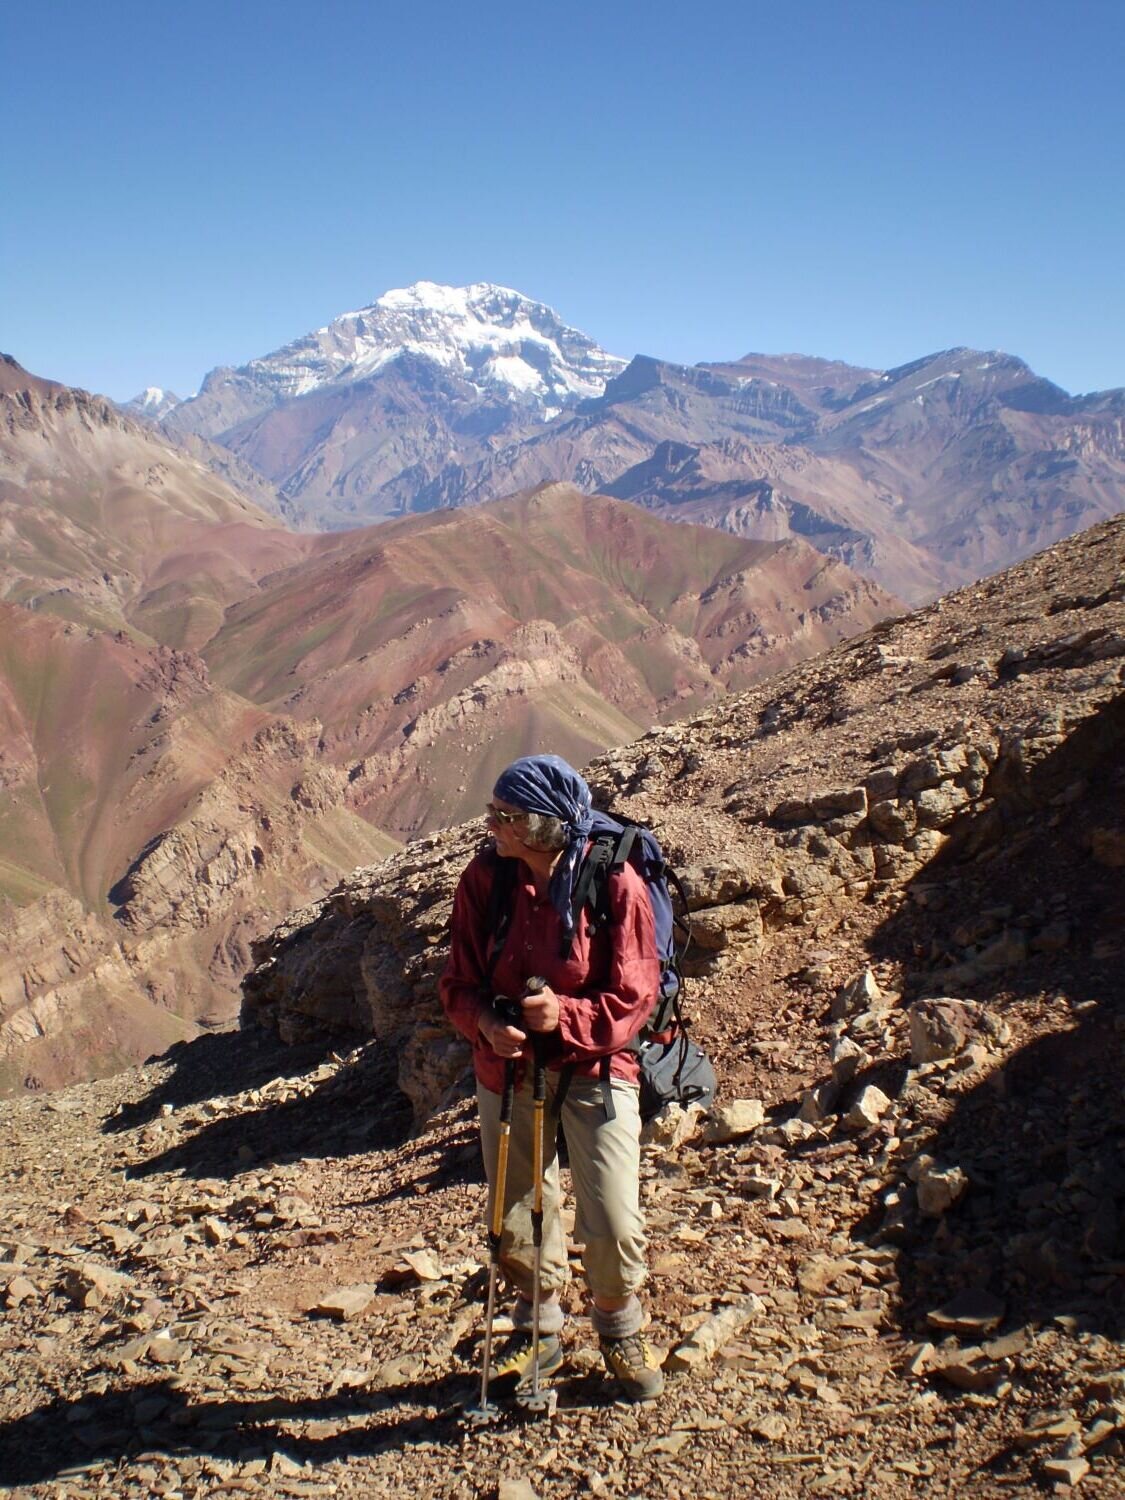 Annabelle Barker with Aconcagua in the background - Cerro Penitentes, Mendoza, Argentina in 2009